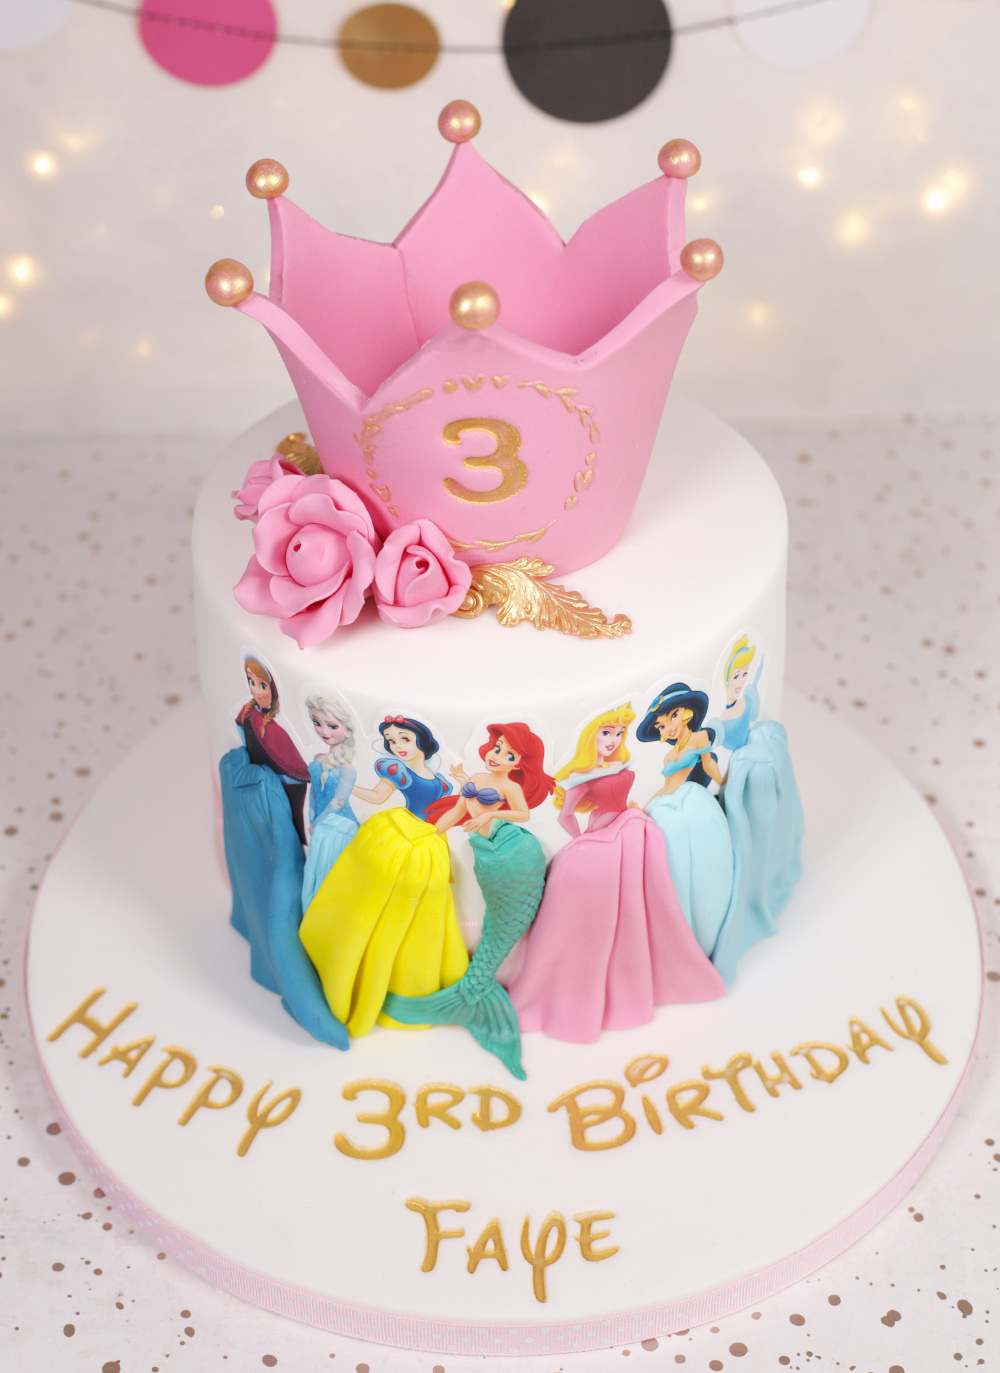 Disney princess Party cake ideas - YouTube